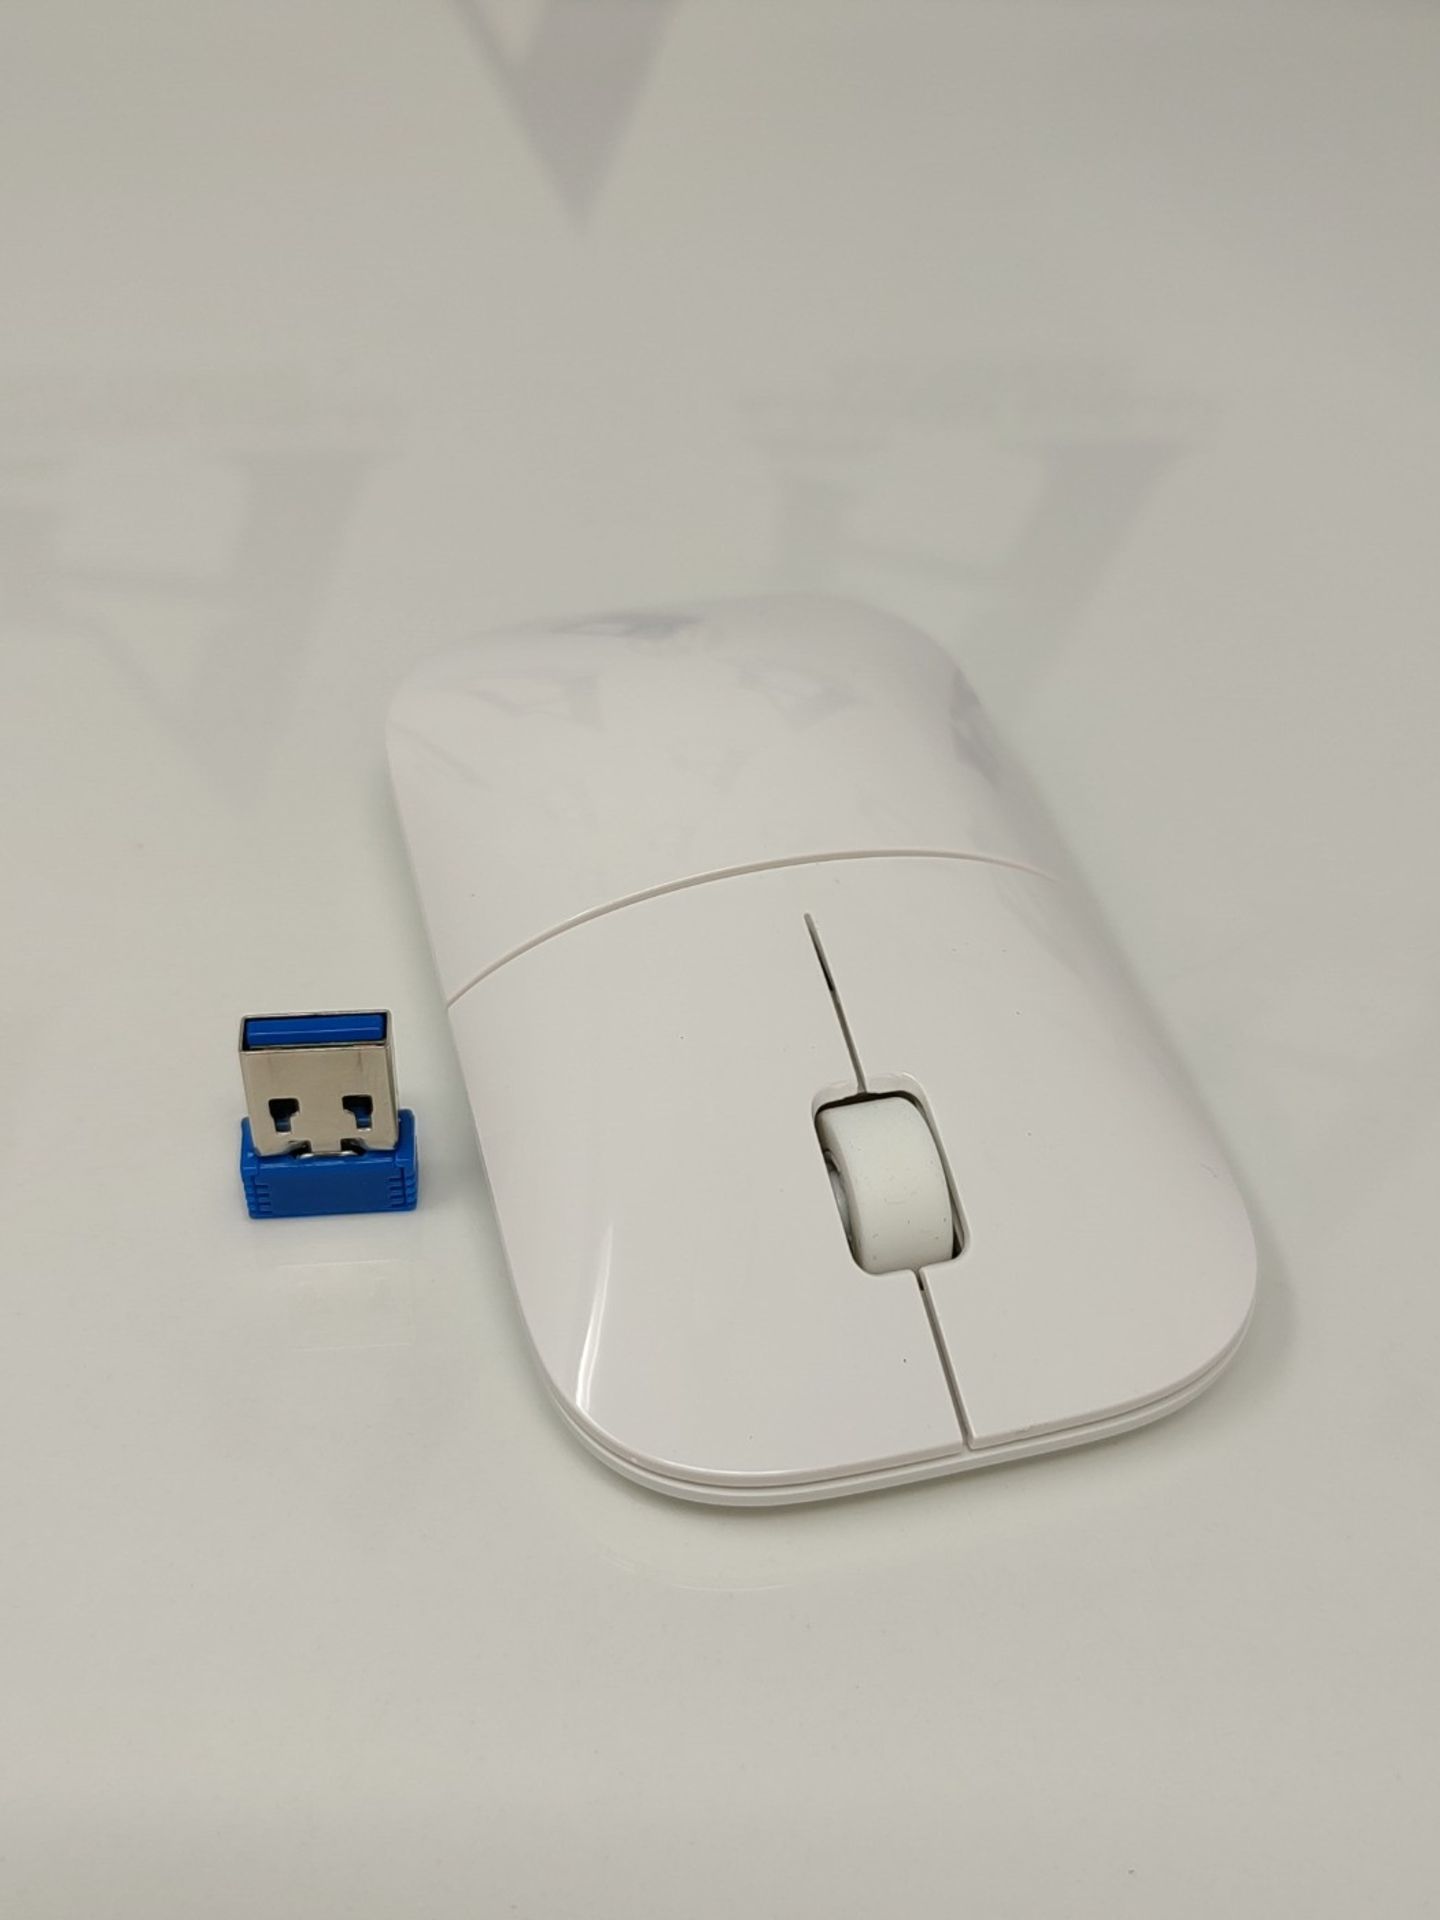 HP Z3700 Wireless Mouse, Precise Sensor, Blue LED Technology, 1200 DPI, 3 Buttons, Scr - Image 2 of 3